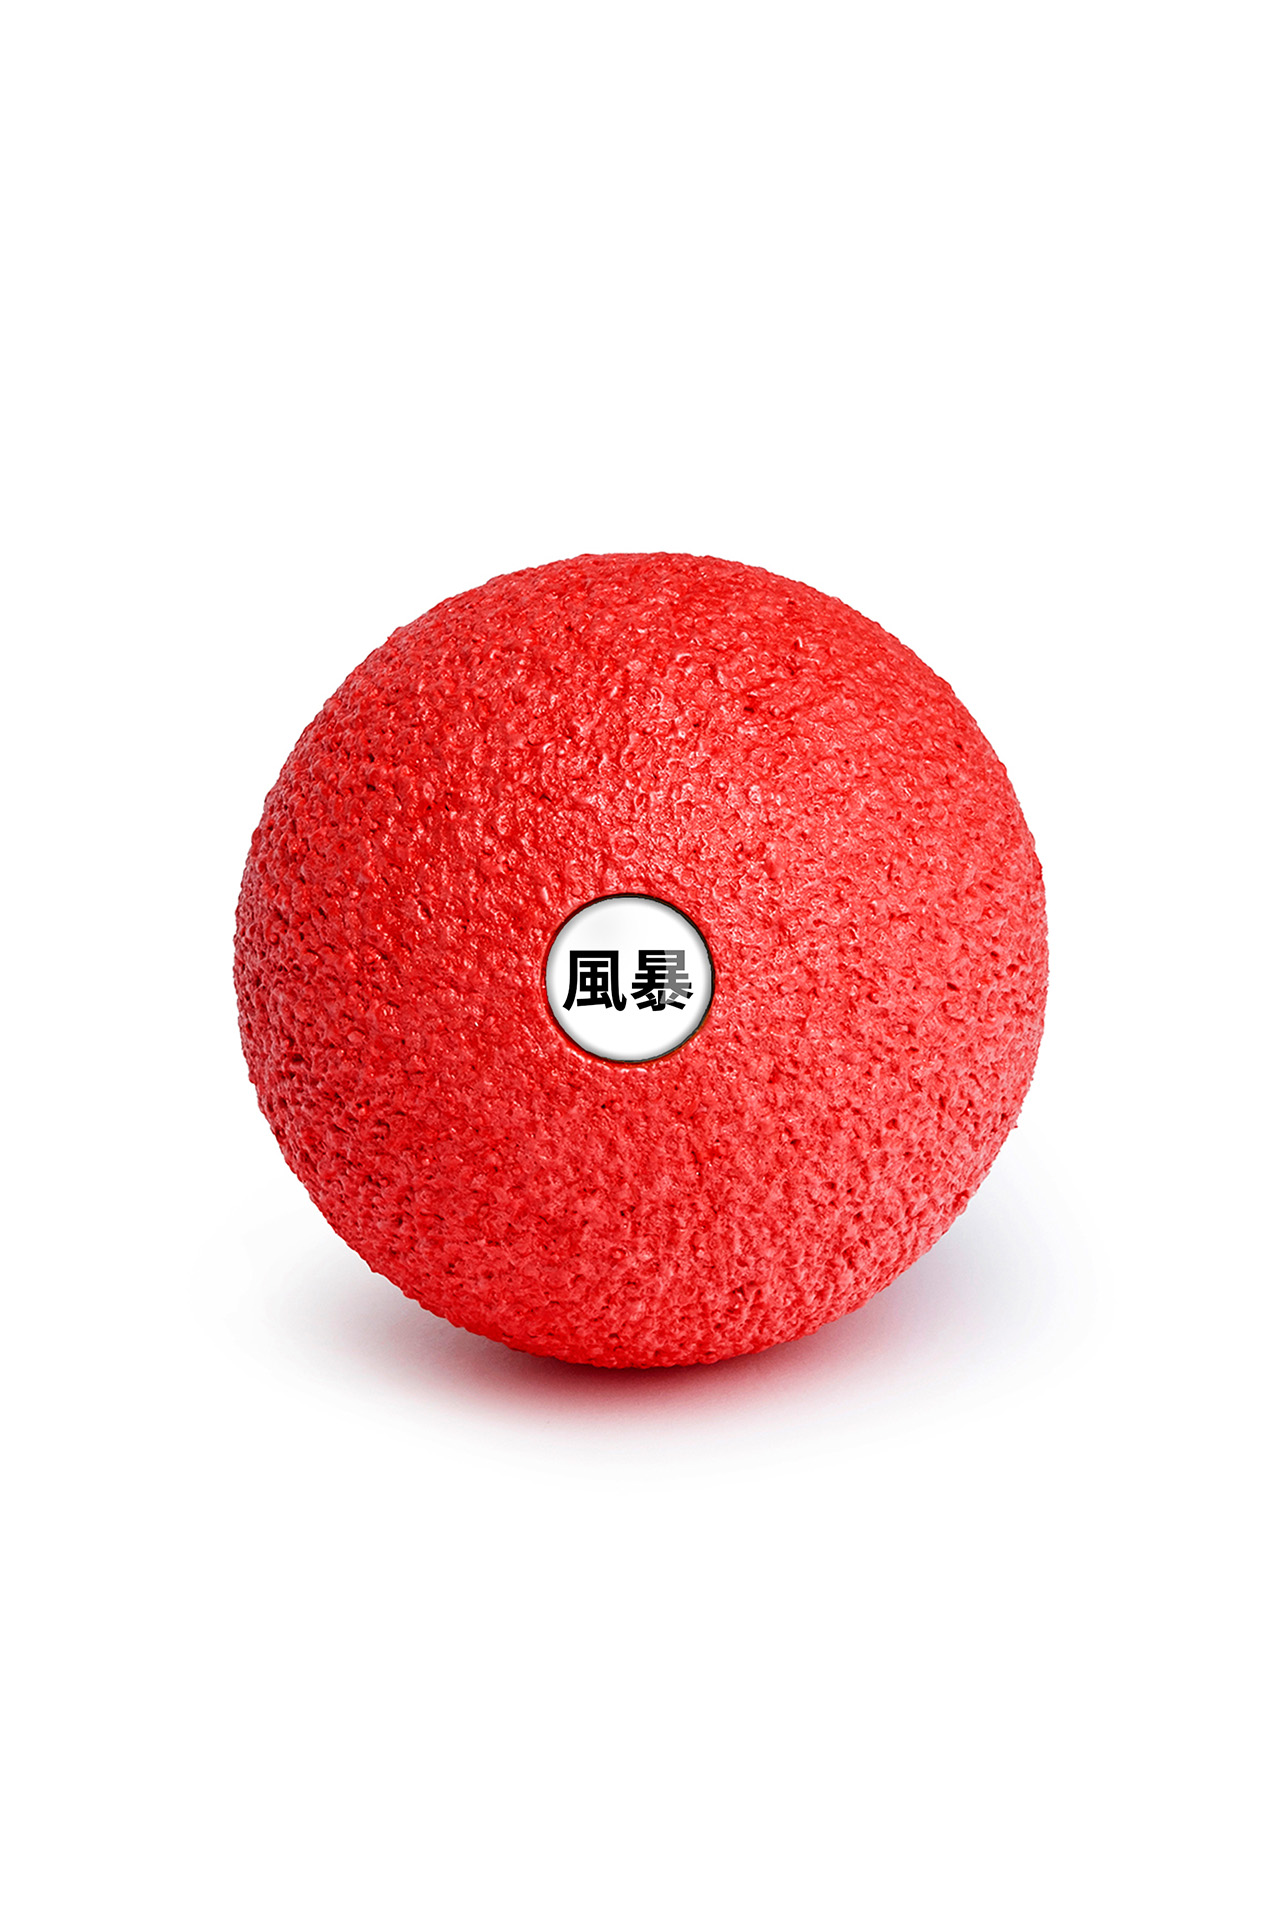 blackroll ball 8cm fengbao kung fu shop wien 1080 chinesisch red rot